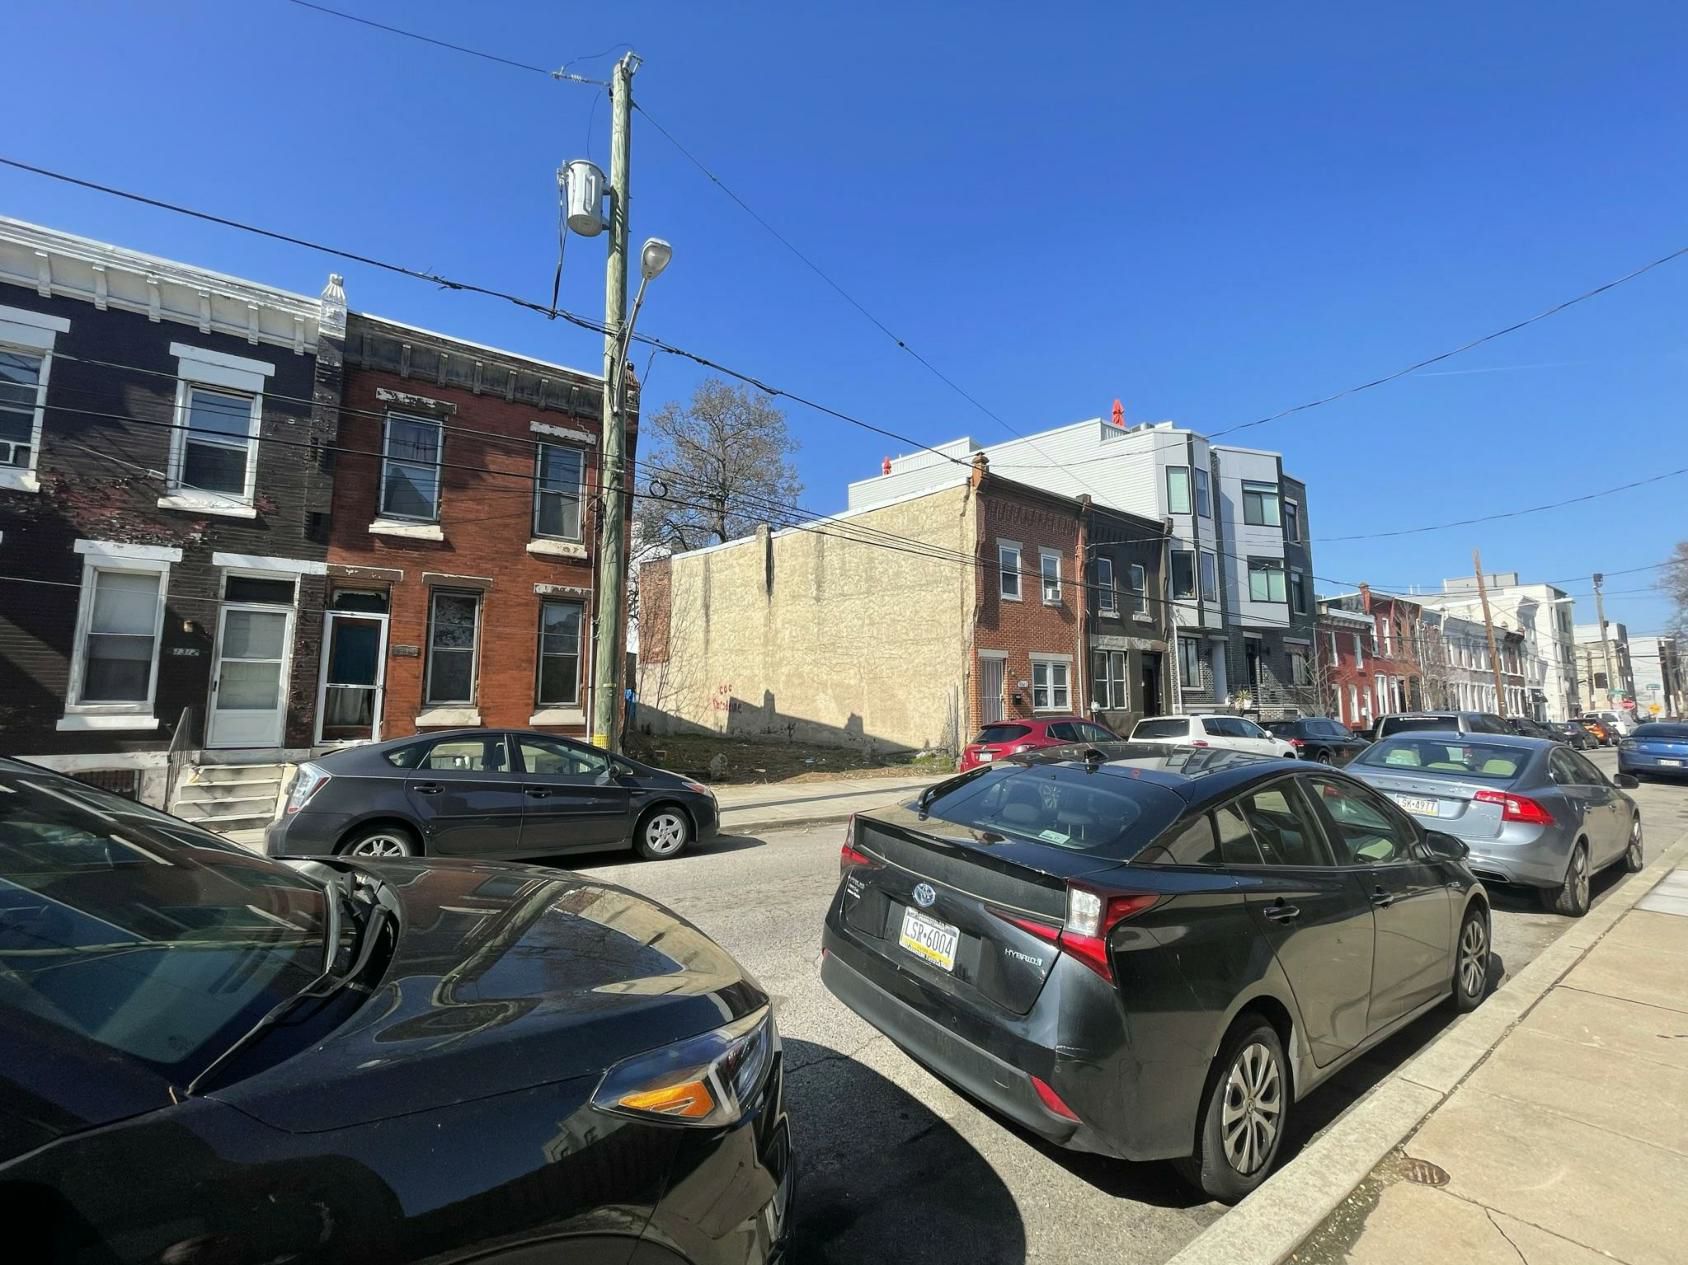 1316 North 27th Street. Site conditions prior to redevelopment. Looking northwest. Credit: Moto Designshop via the City of Philadelphia